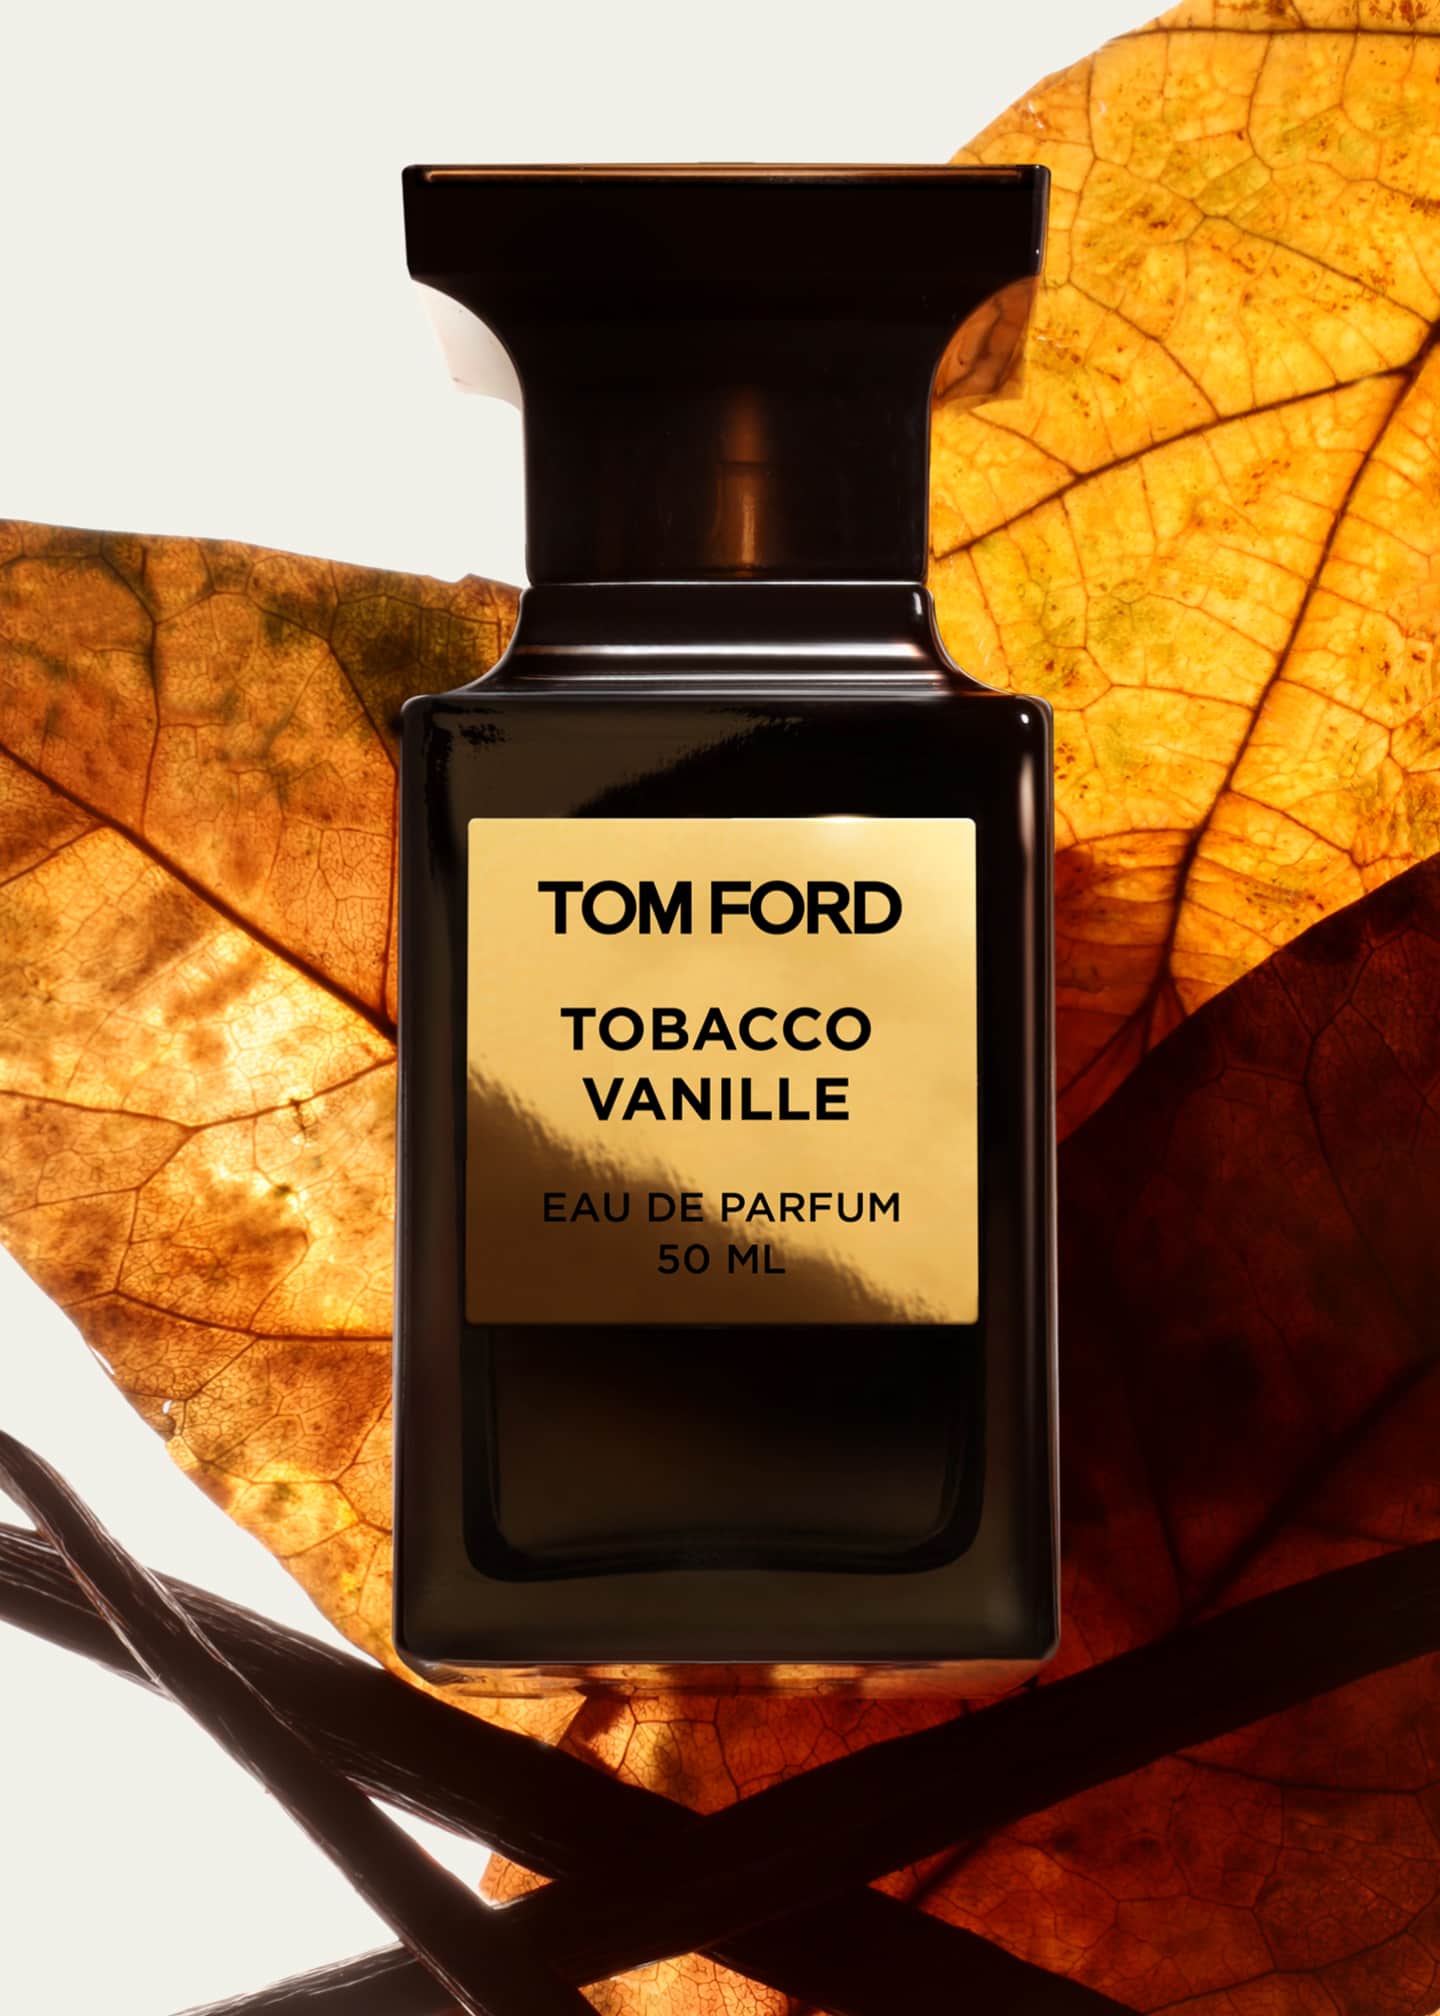 TOM FORD Tobacco Vanille Eau de Parfum, 3.4 oz. Image 2 of 2